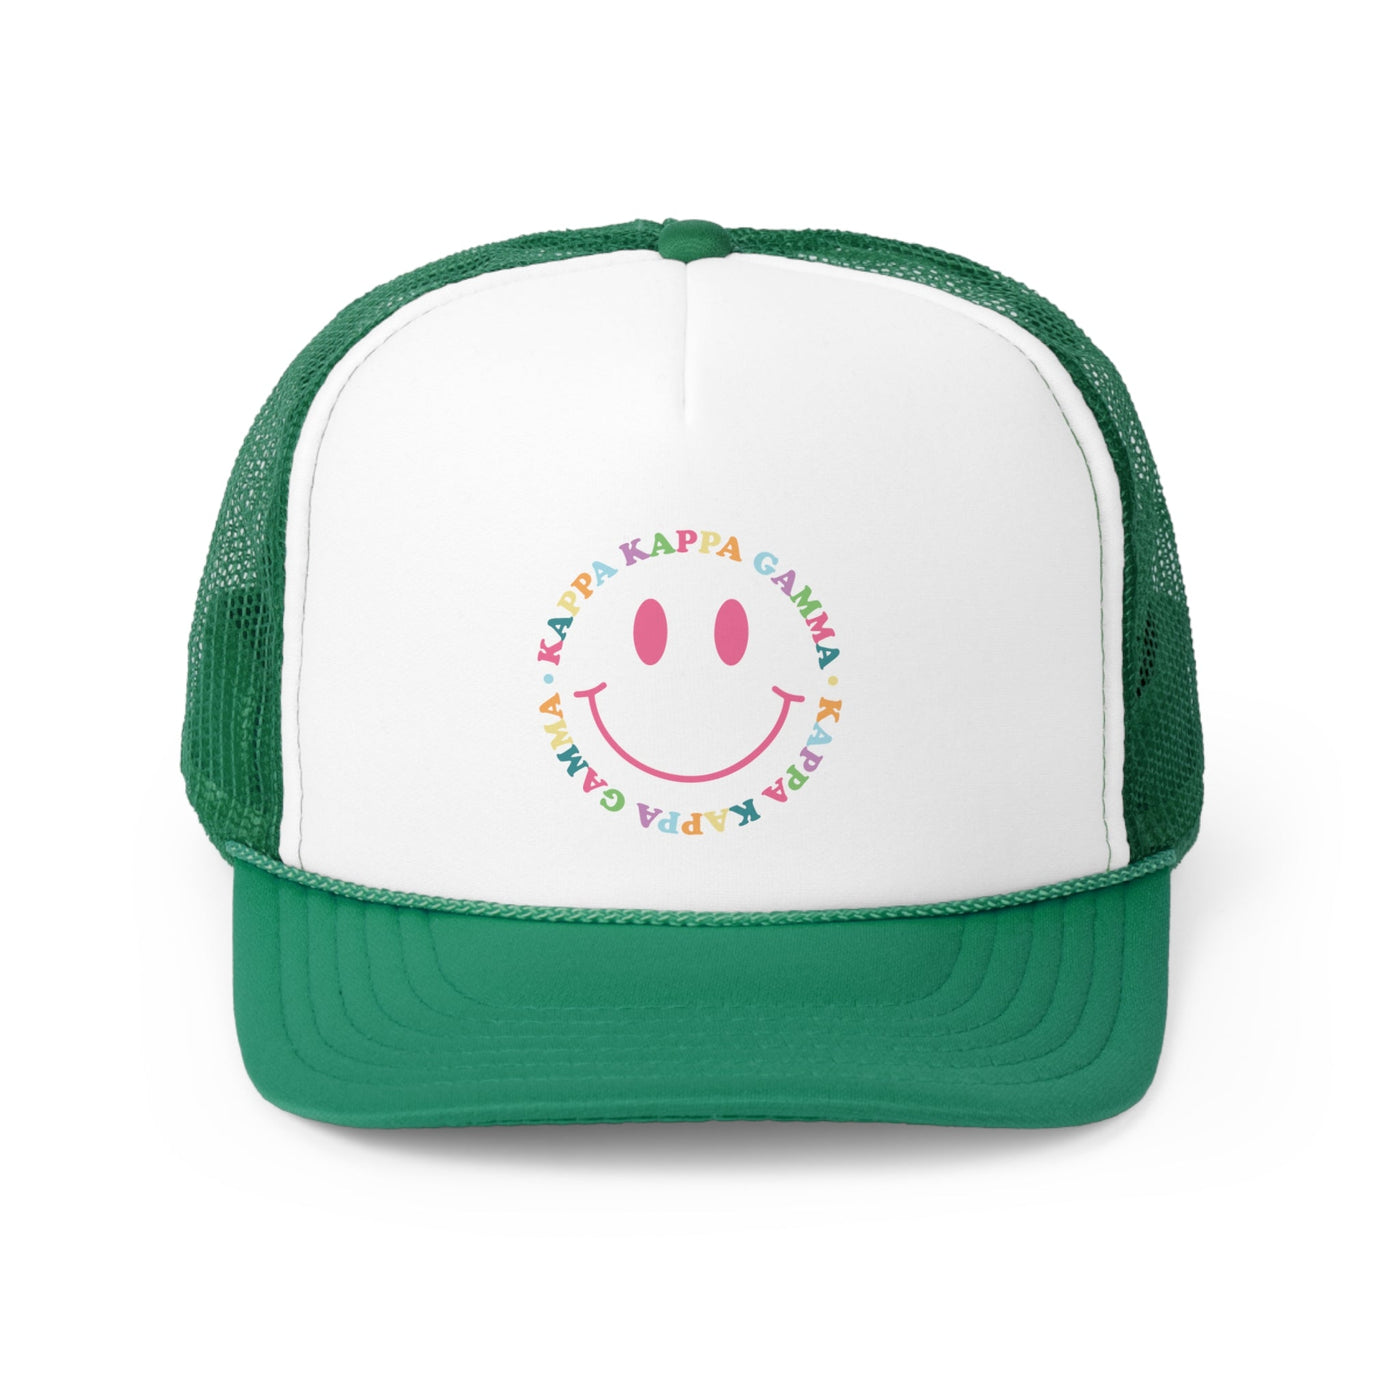 Kappa Kappa Gamma Colorful Smile Foam Trucker Hat